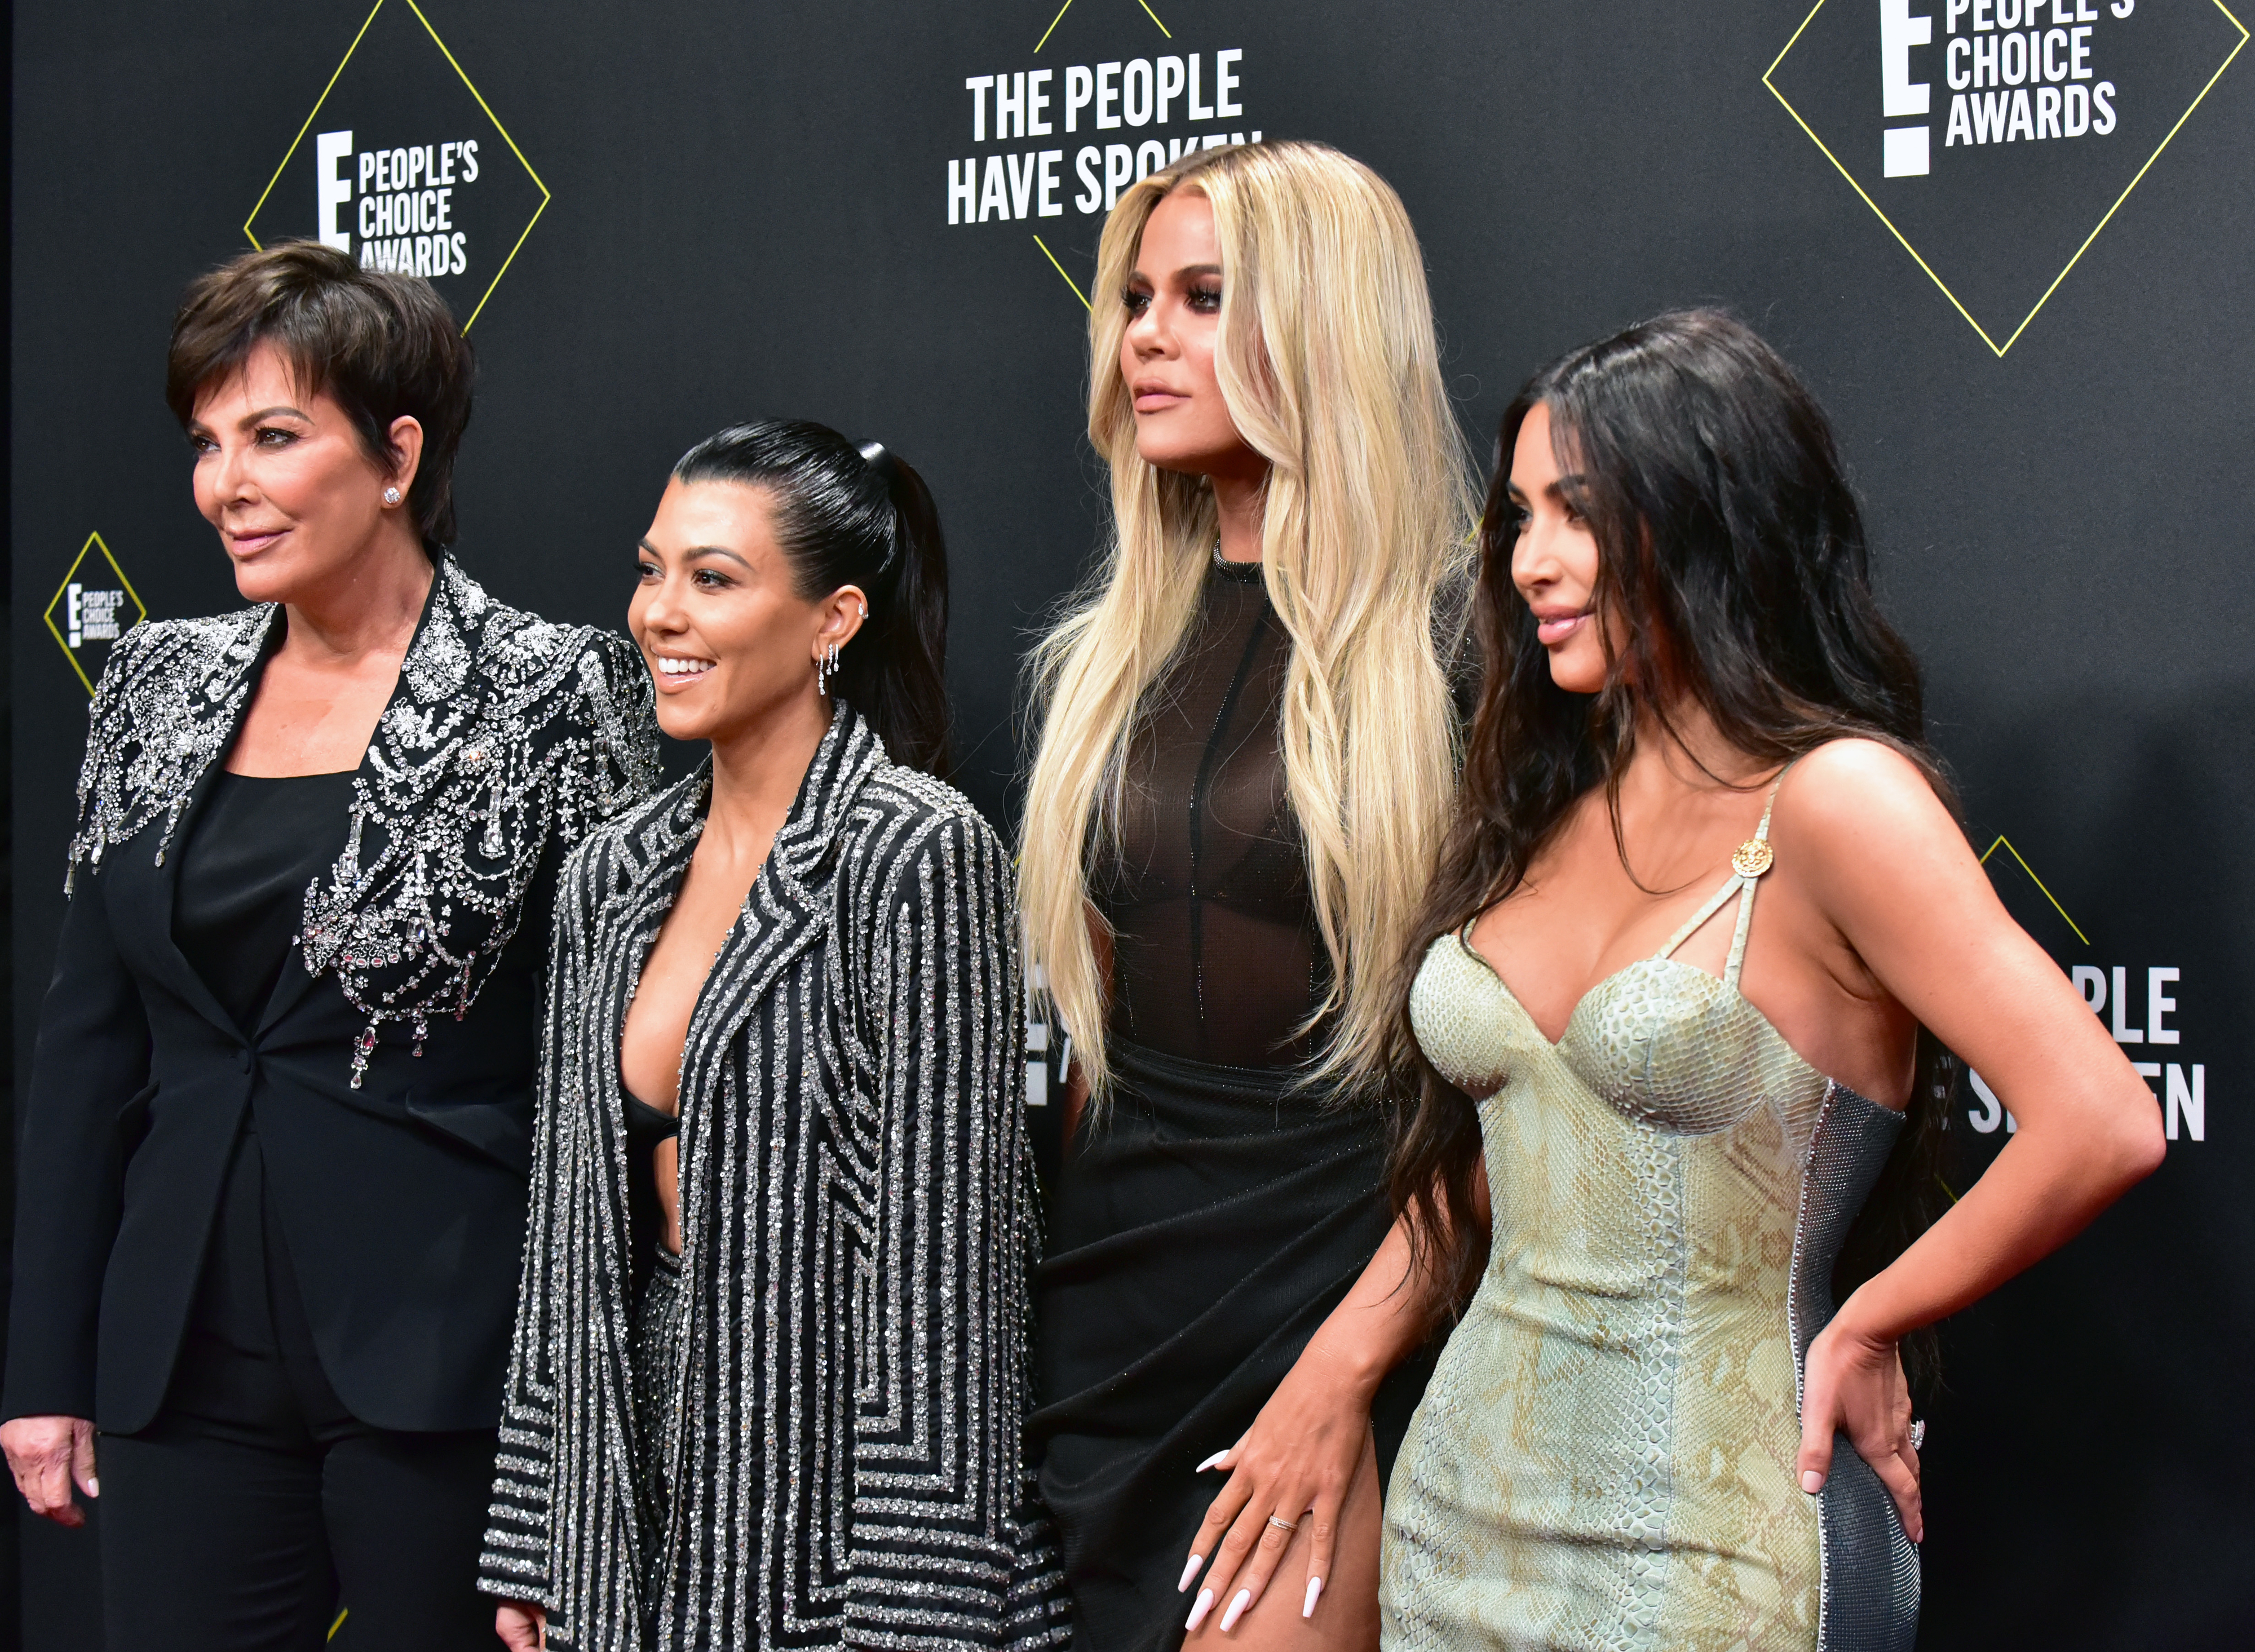 Kris Jenner and Kourtney, Khloé, and Kim Kardashian at a media event